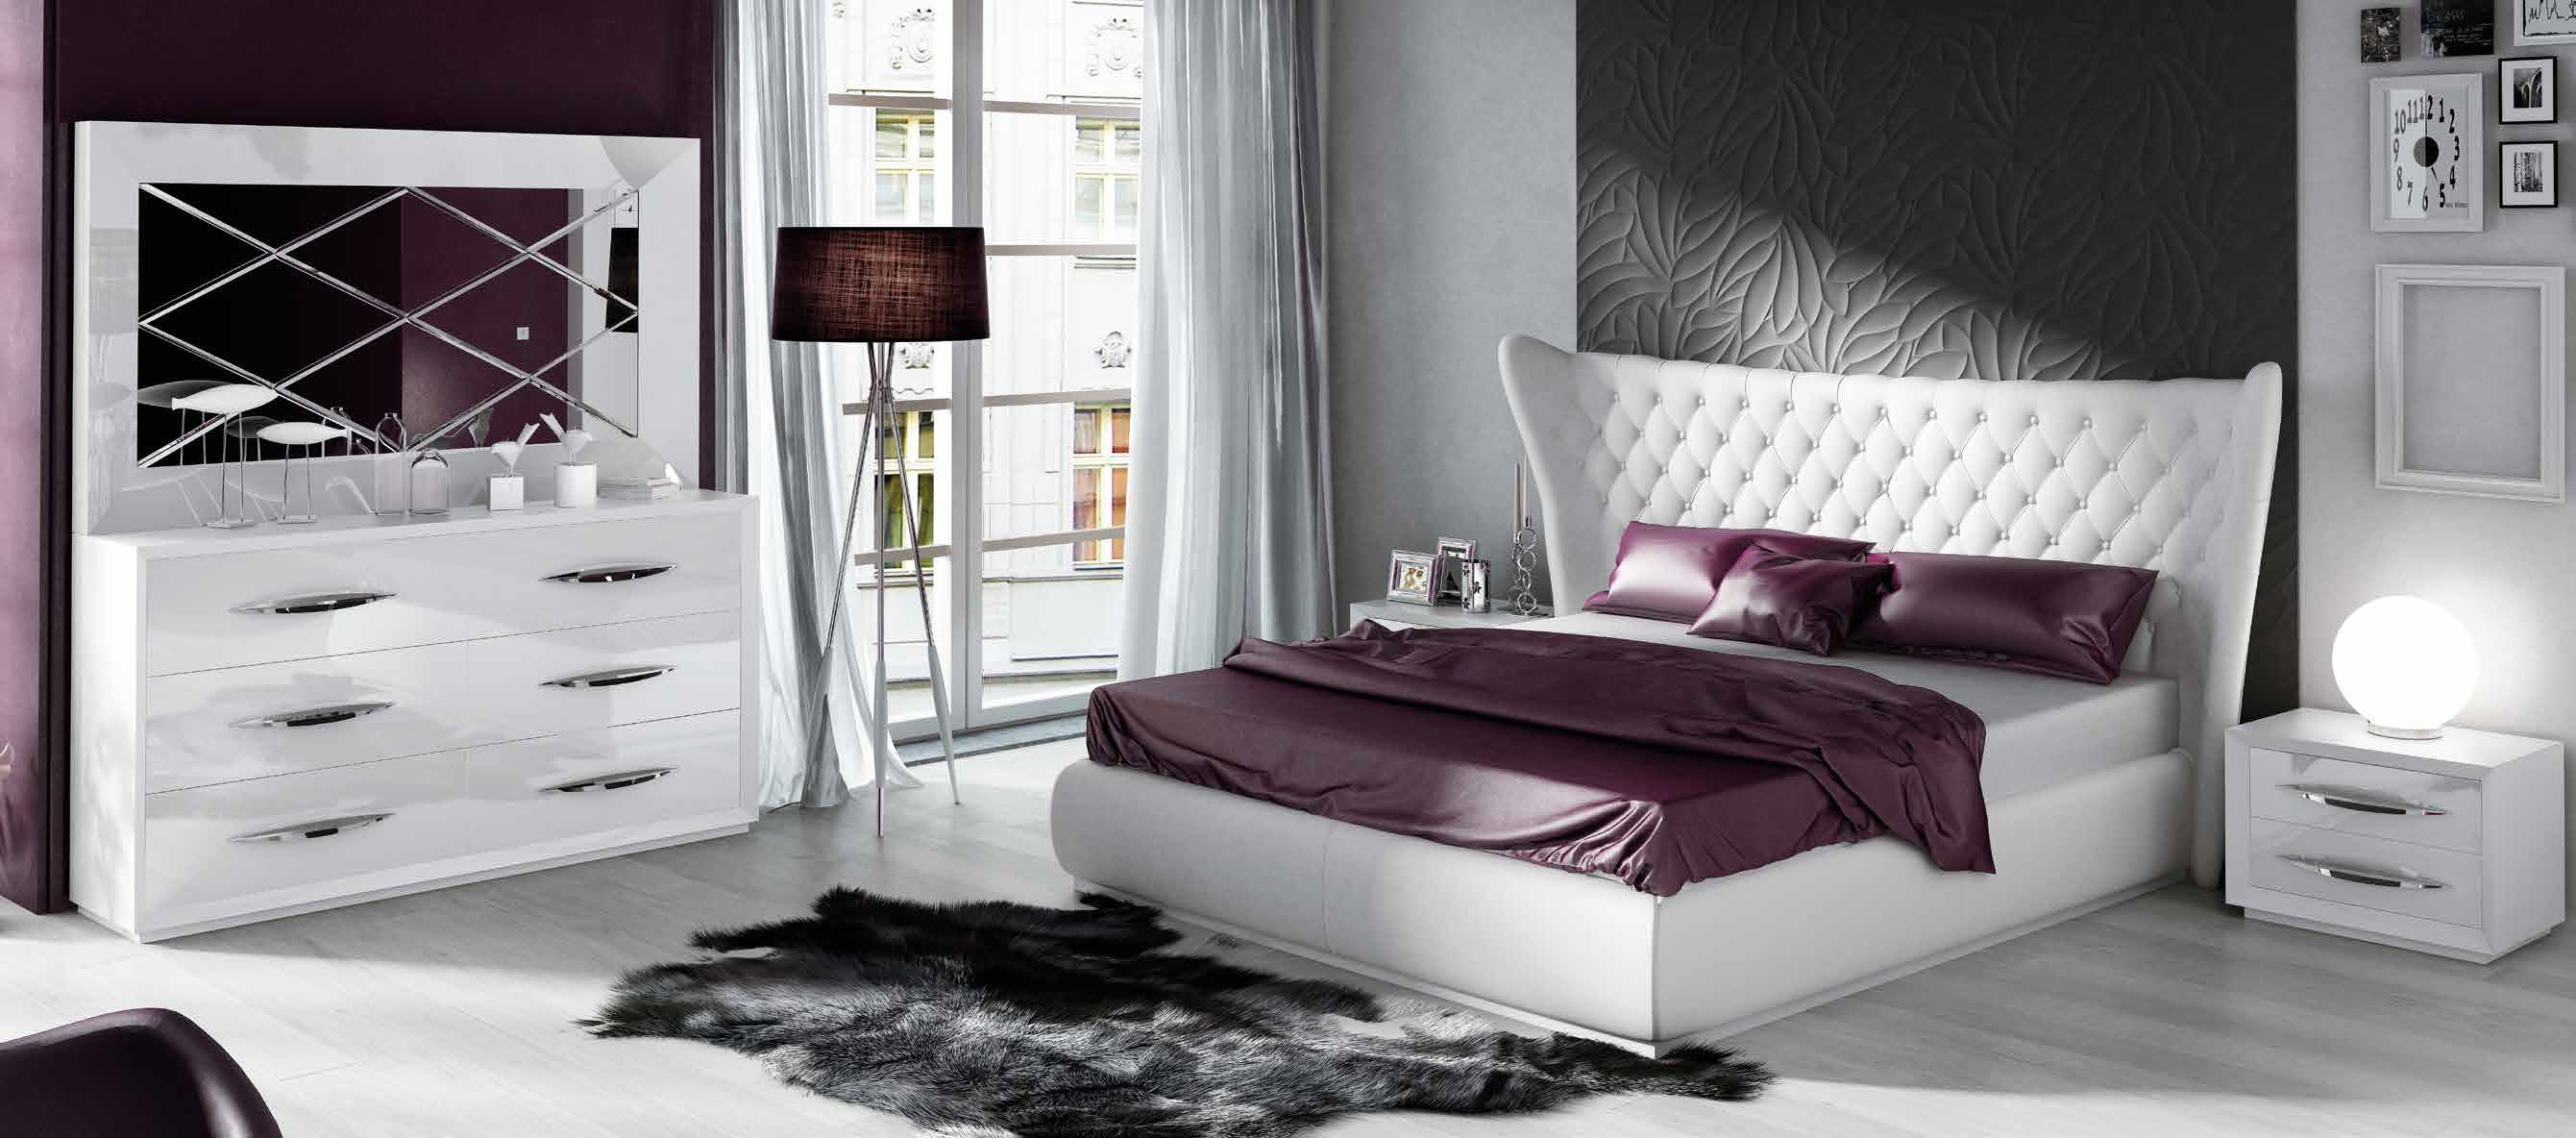 Brands Franco Furniture Bedrooms vol3, Spain DOR 83